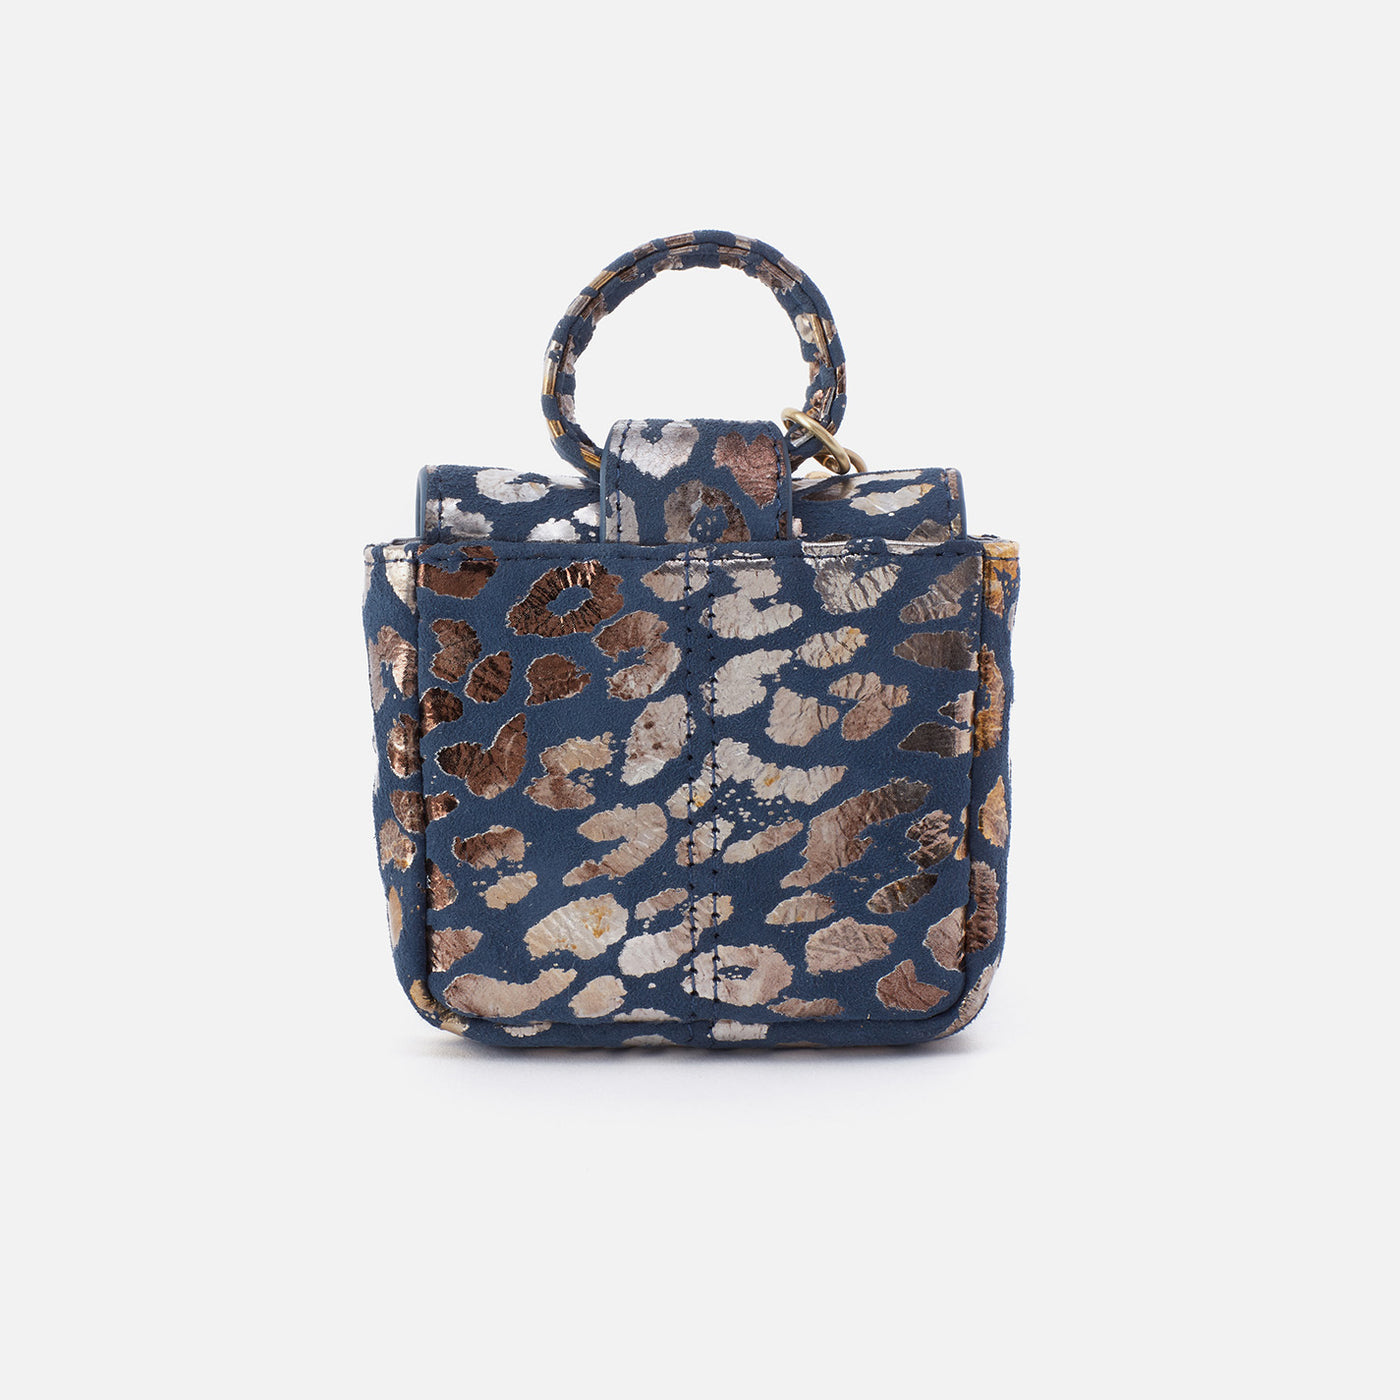 Bag Charm/ Cheetah Charm 